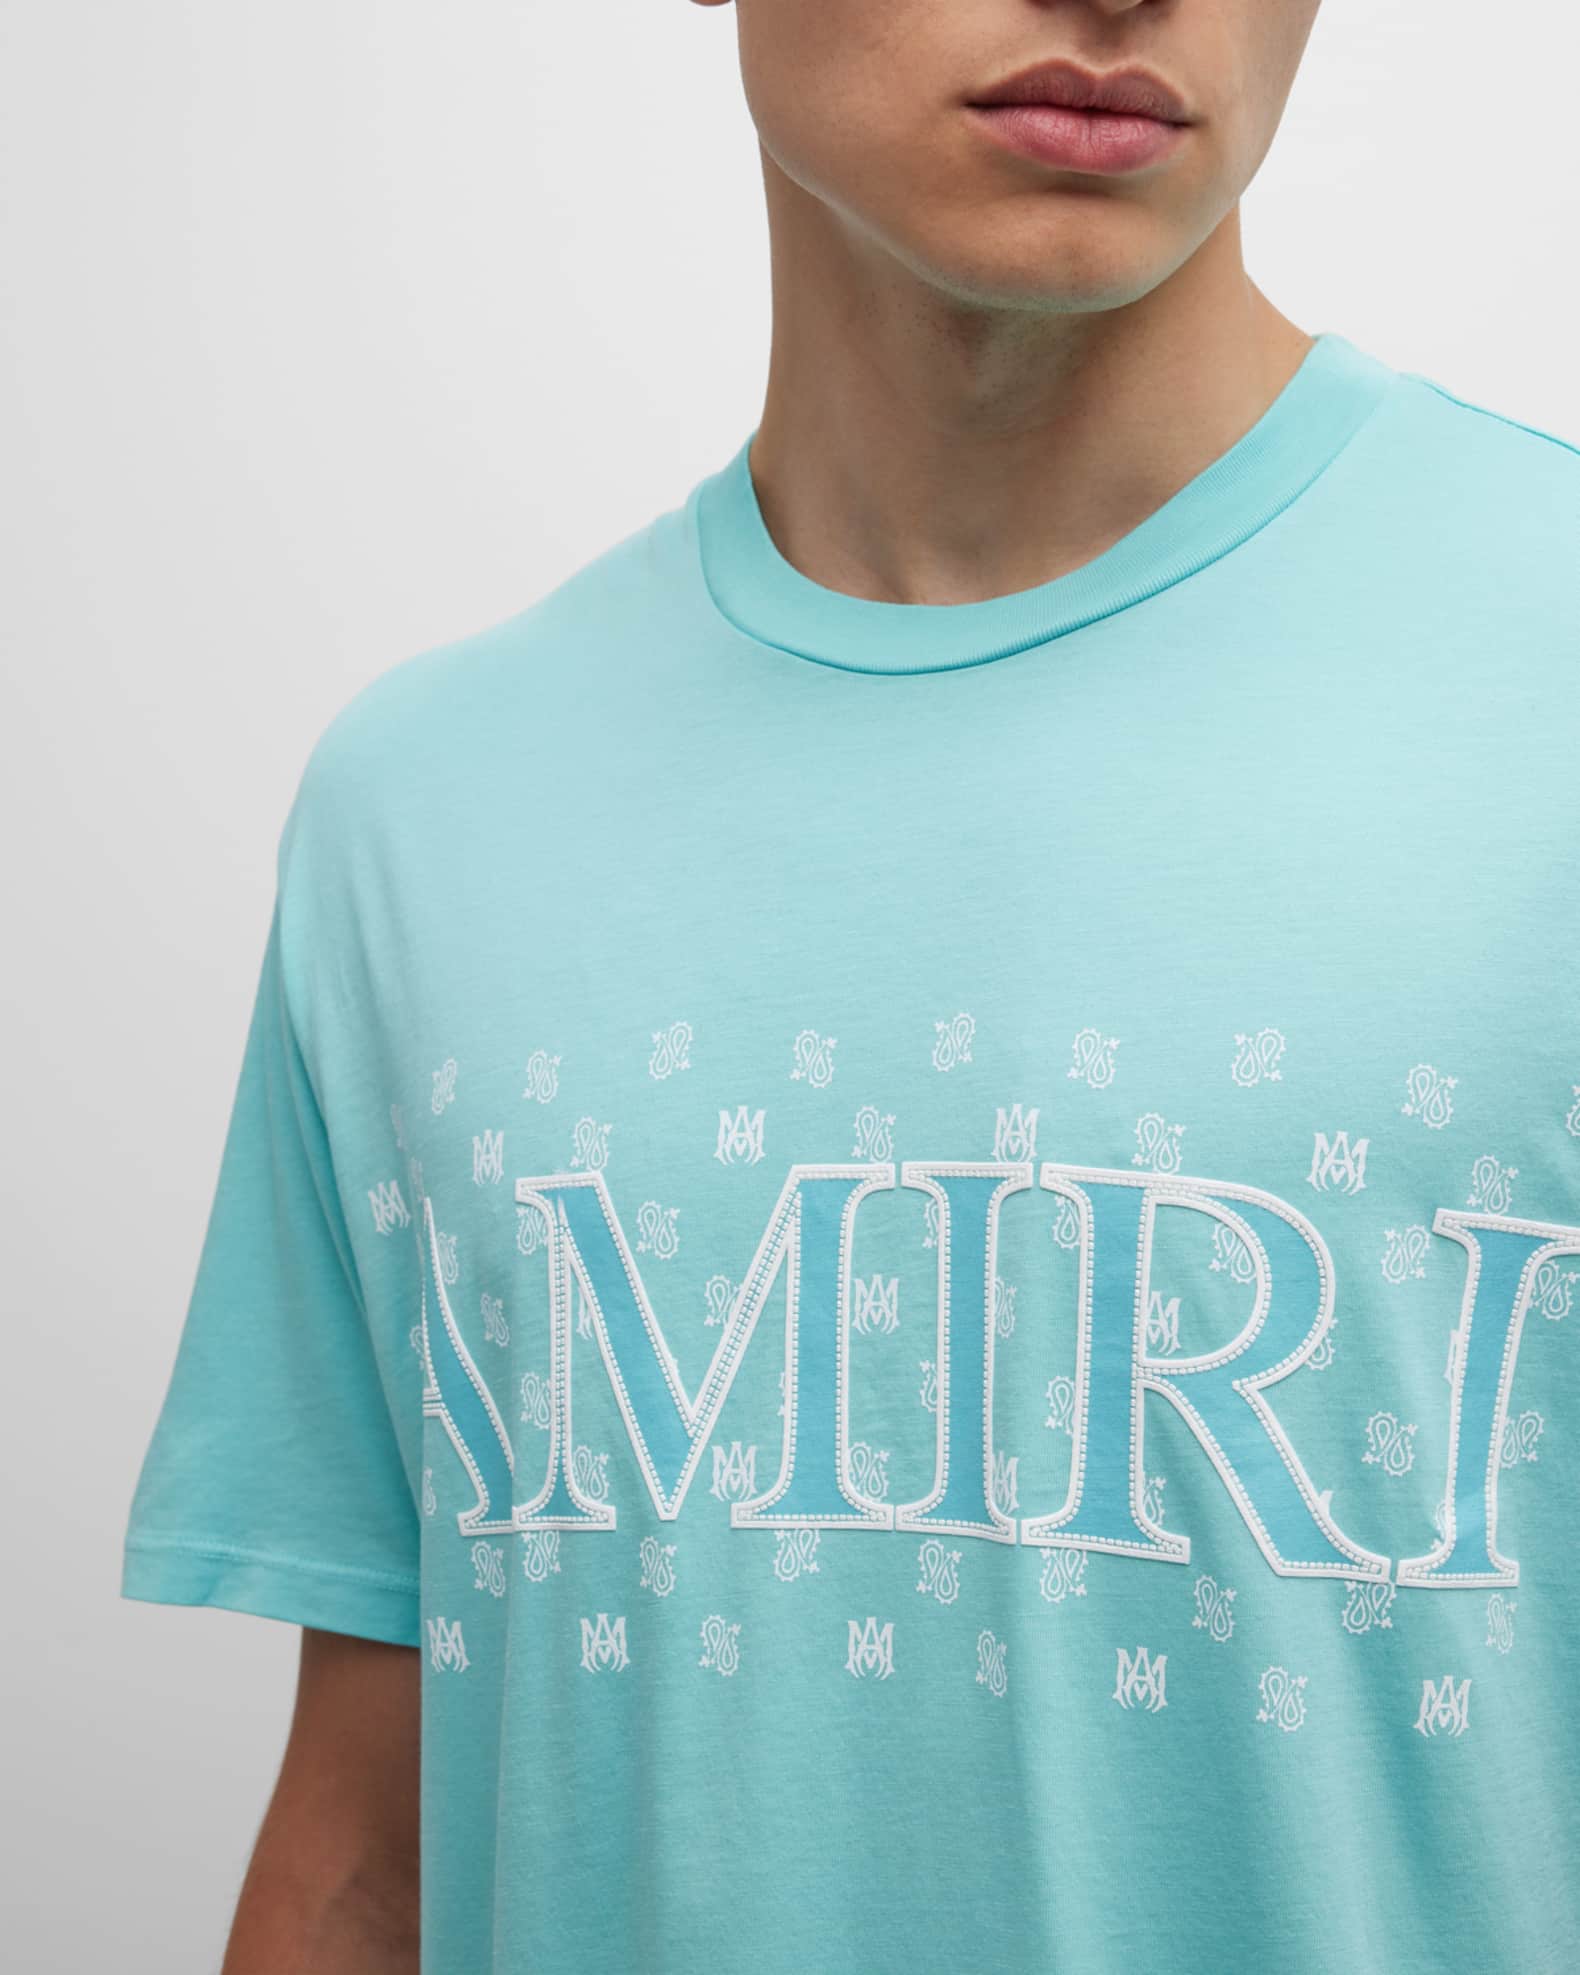 Men's luxury T-Shirt - Amiri T-Shirt in blue cotton with white